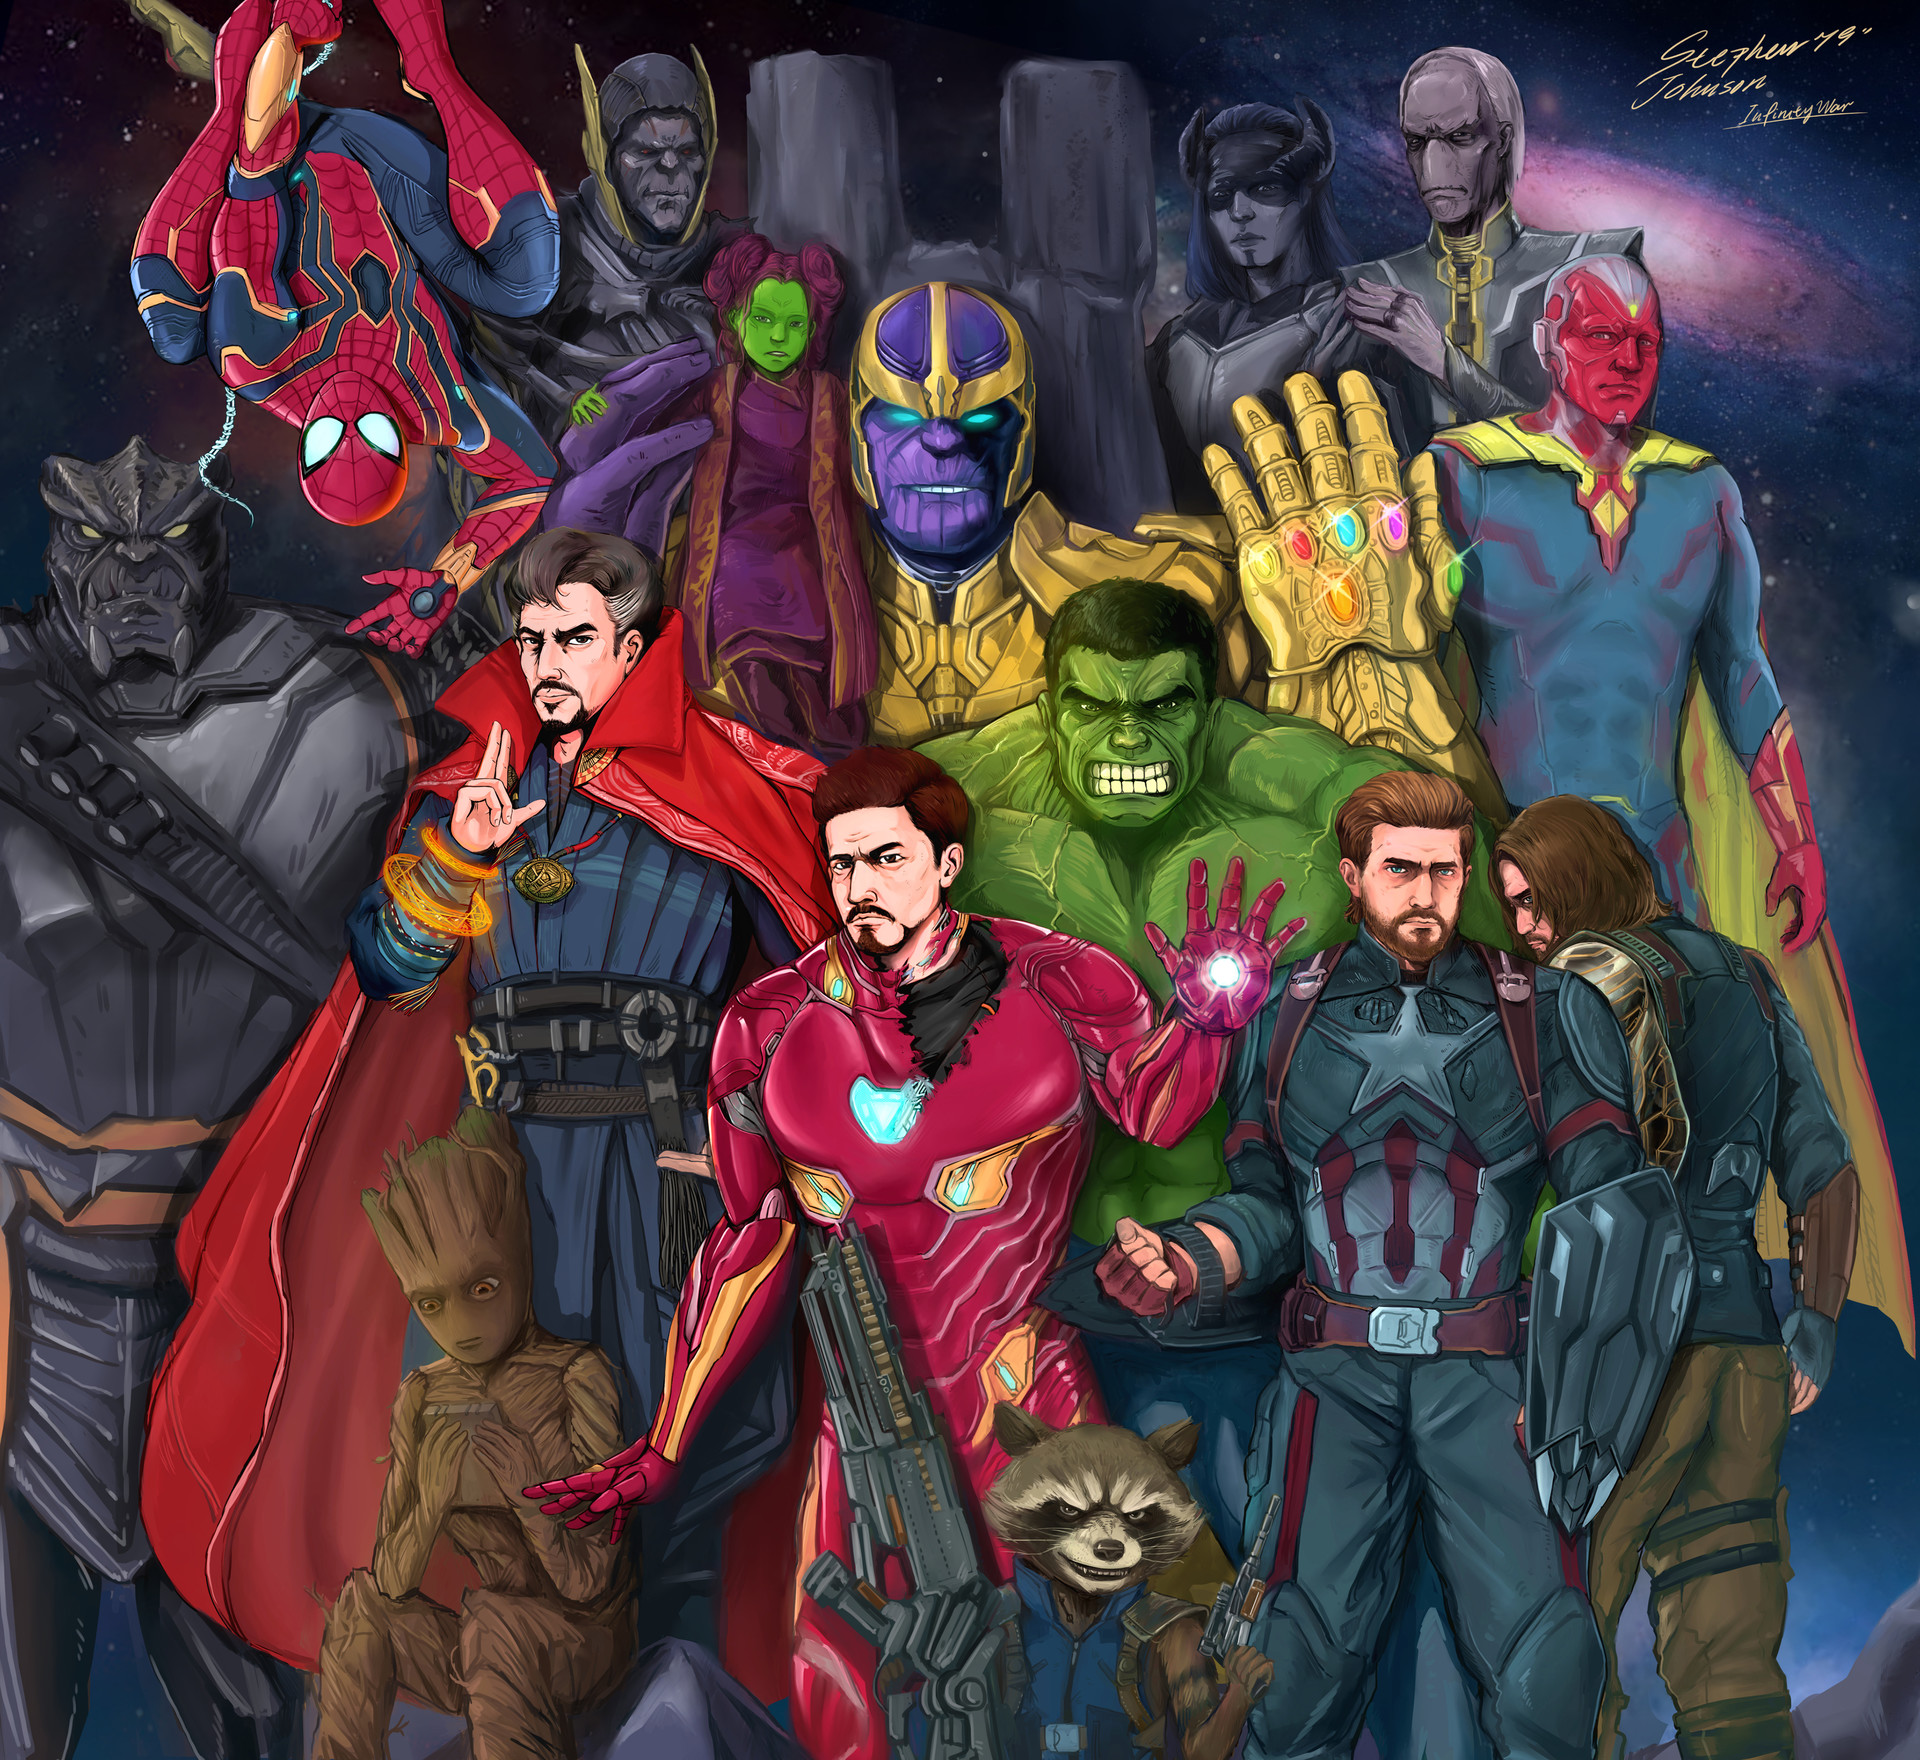 Avengers Infinity War Fanart Wallpapers